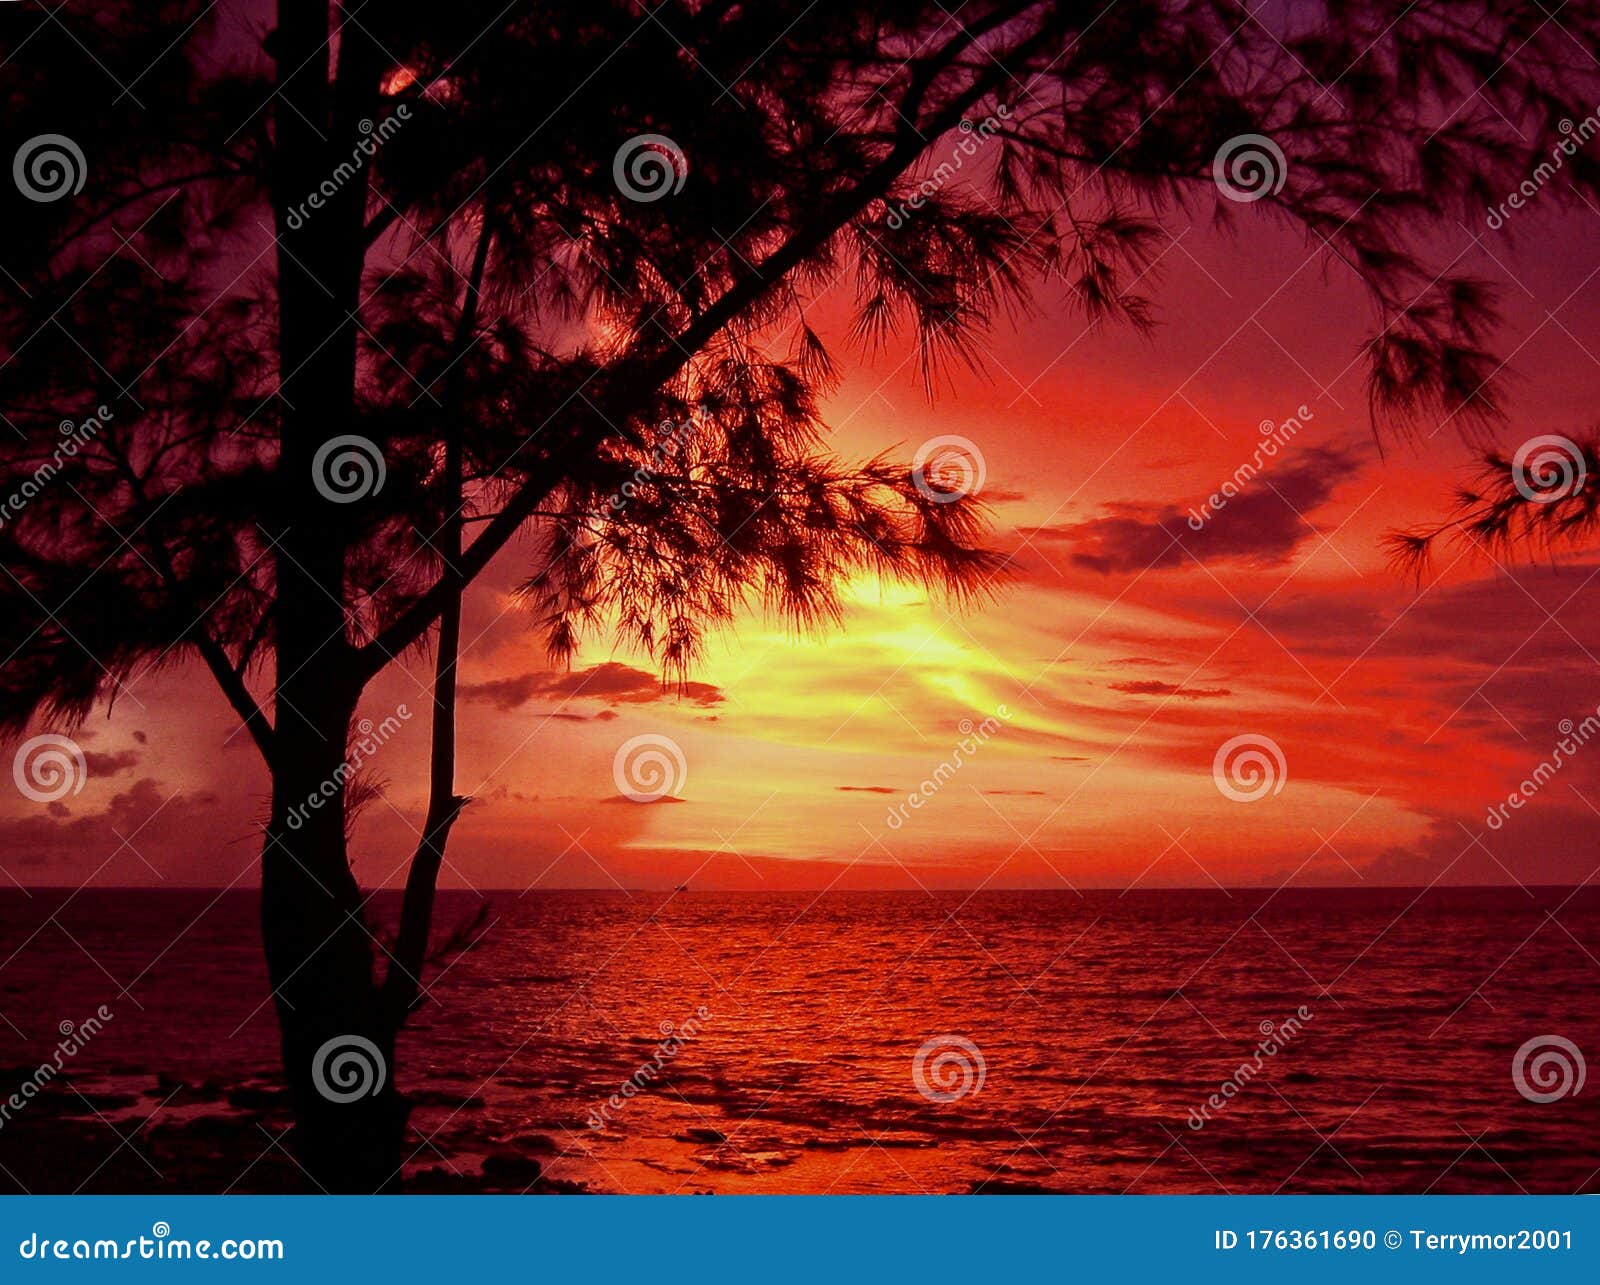 a magestic casuarina tree frames a glorious sunset over the sea at nightcliff, darwin, nt australia